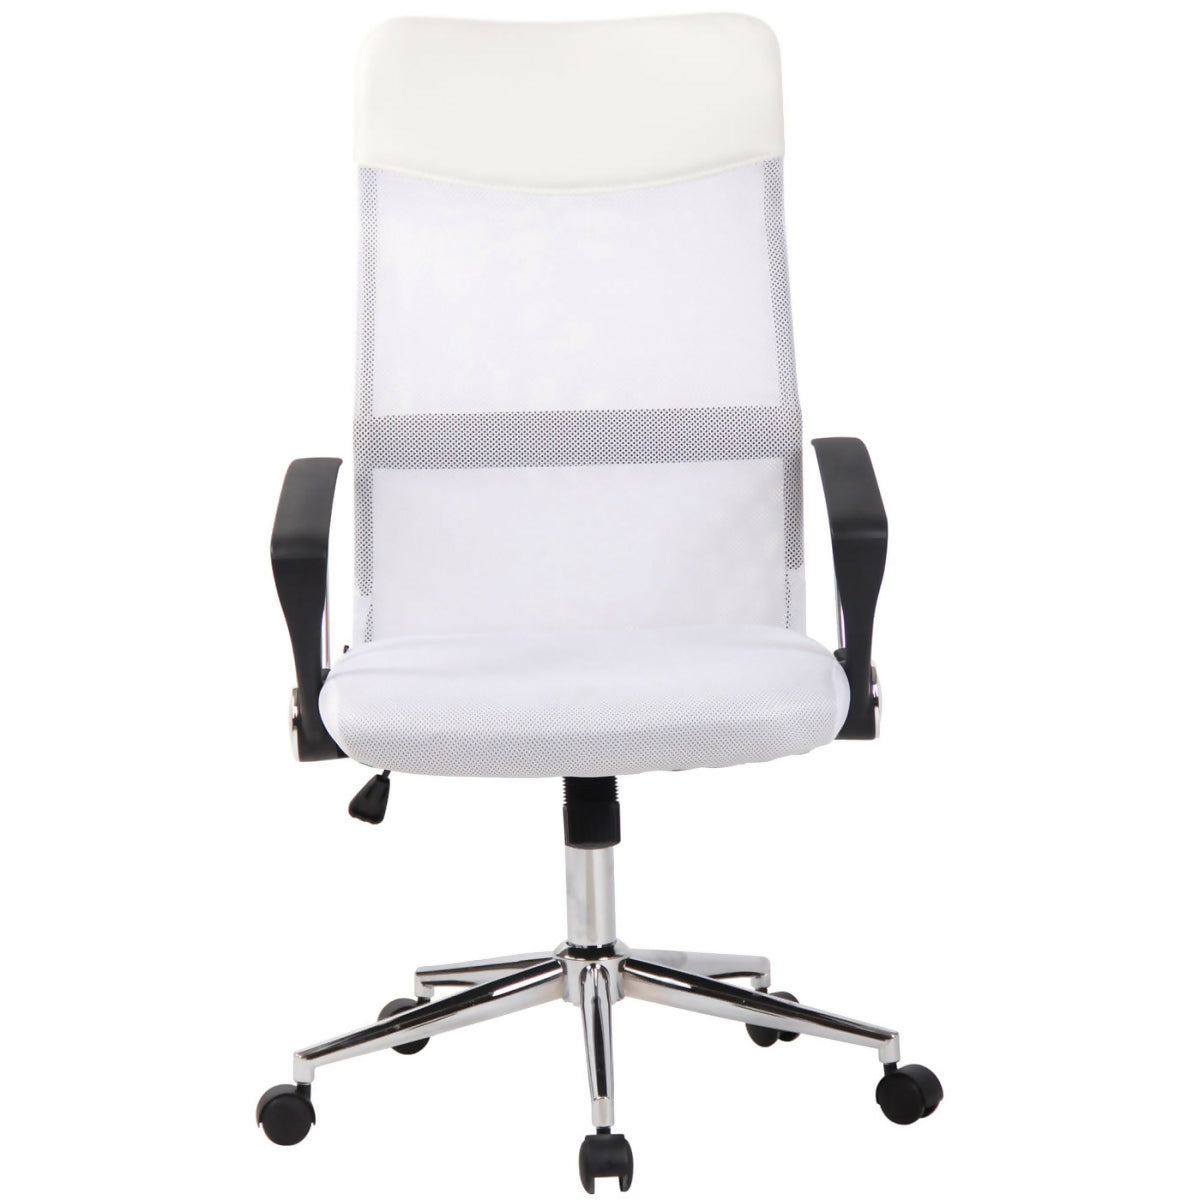 Korba office chair - White fabric - 0